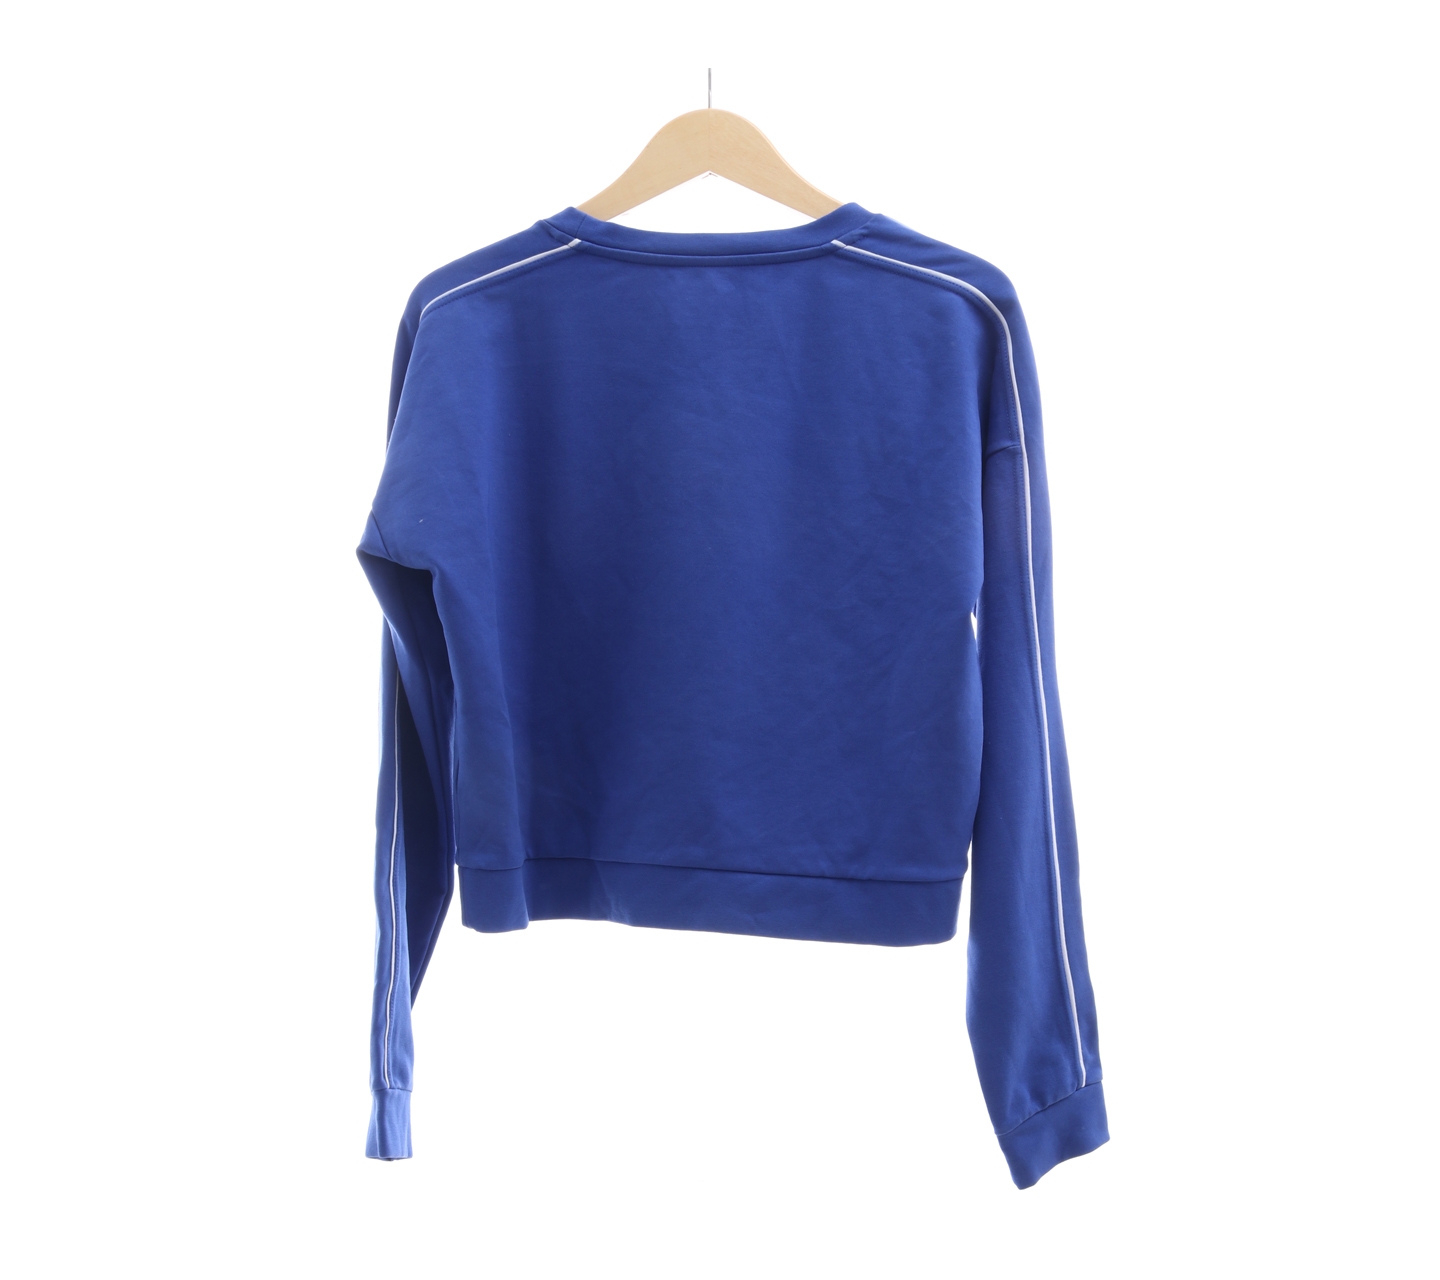 Jack Wills Blue Sweater